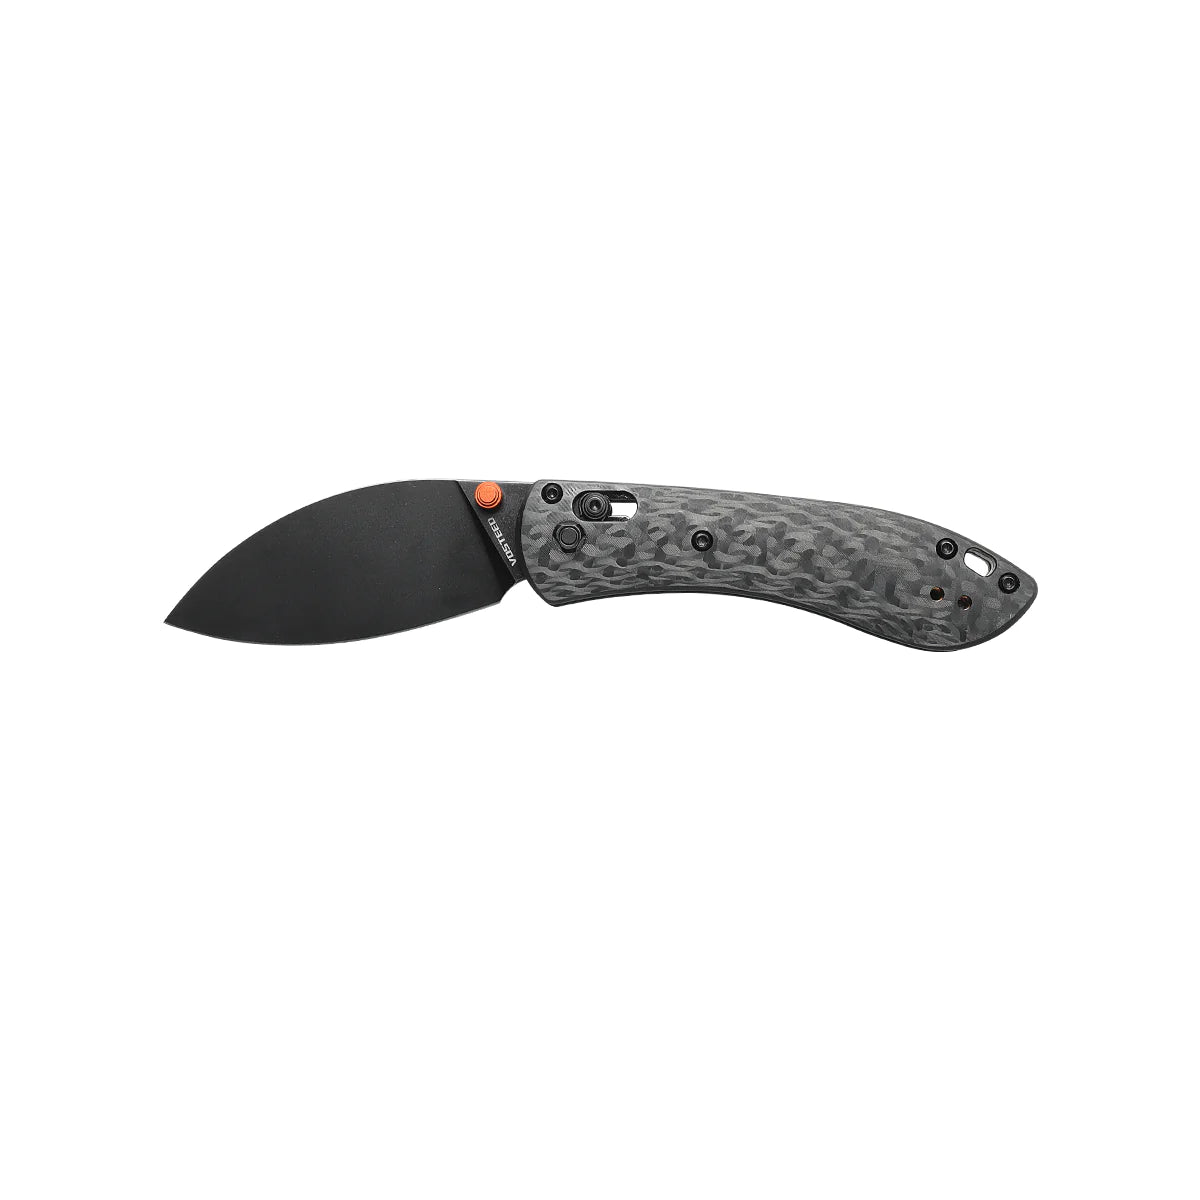 Vosteed Mini Nightshade - Shilin Cutter - Crossbar Lock Knife (2.6" S35VN Black Stonewashed Blade & Carbon Fiber Handle) - A0202